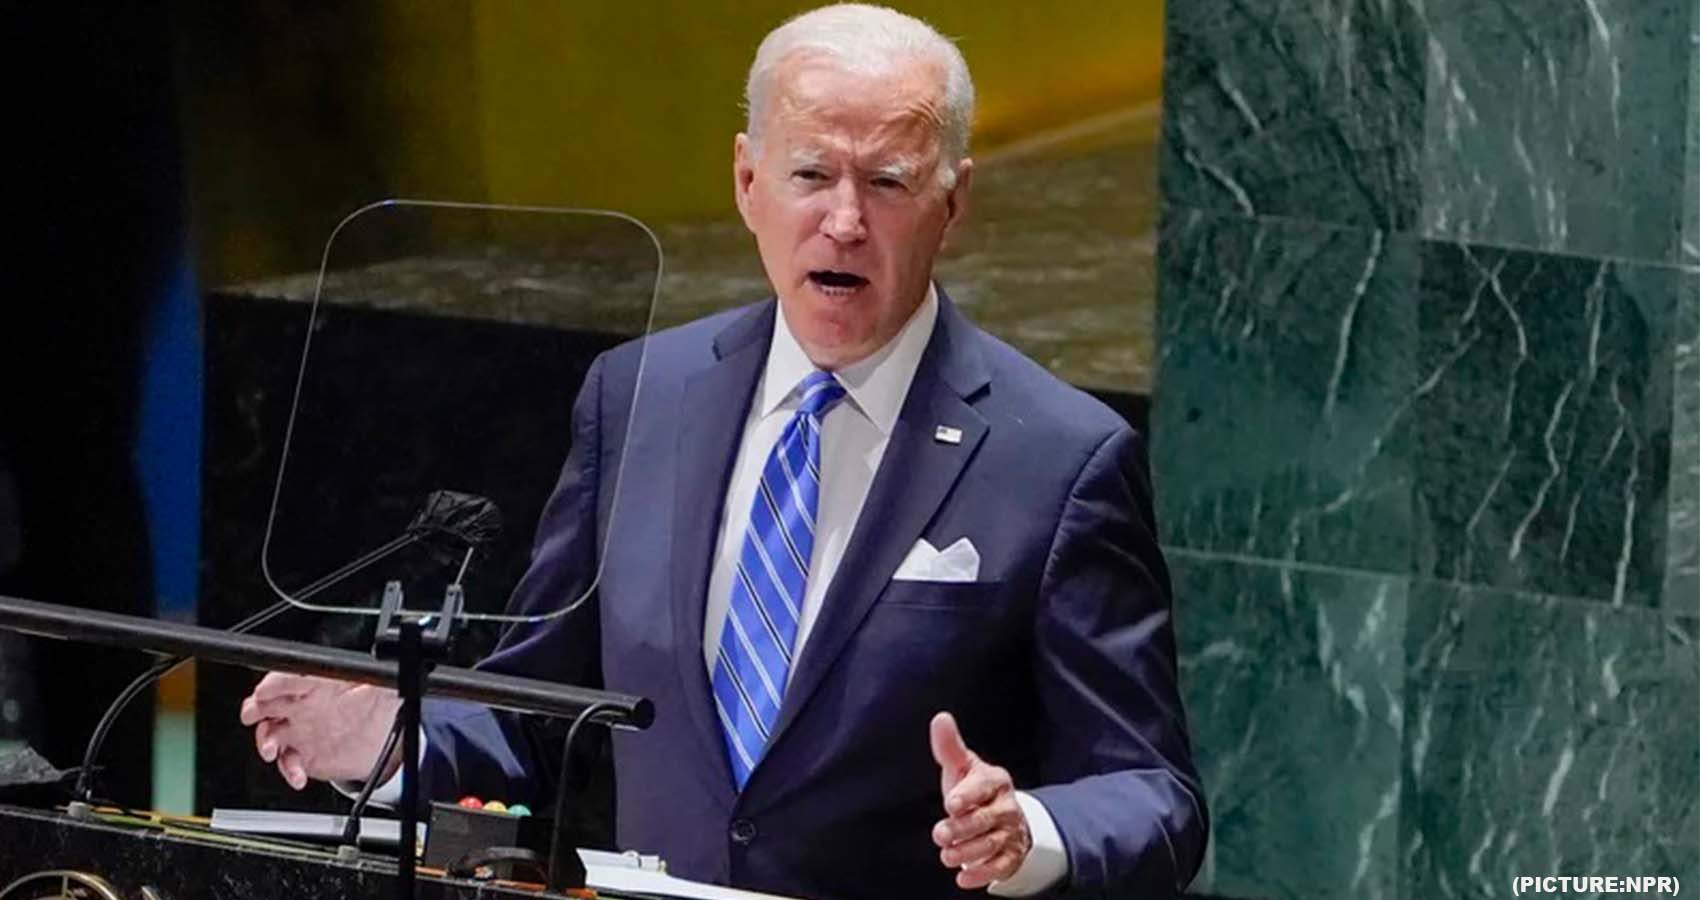 U.S. Is On An Era Of Relentless Diplomacy-Biden At UN